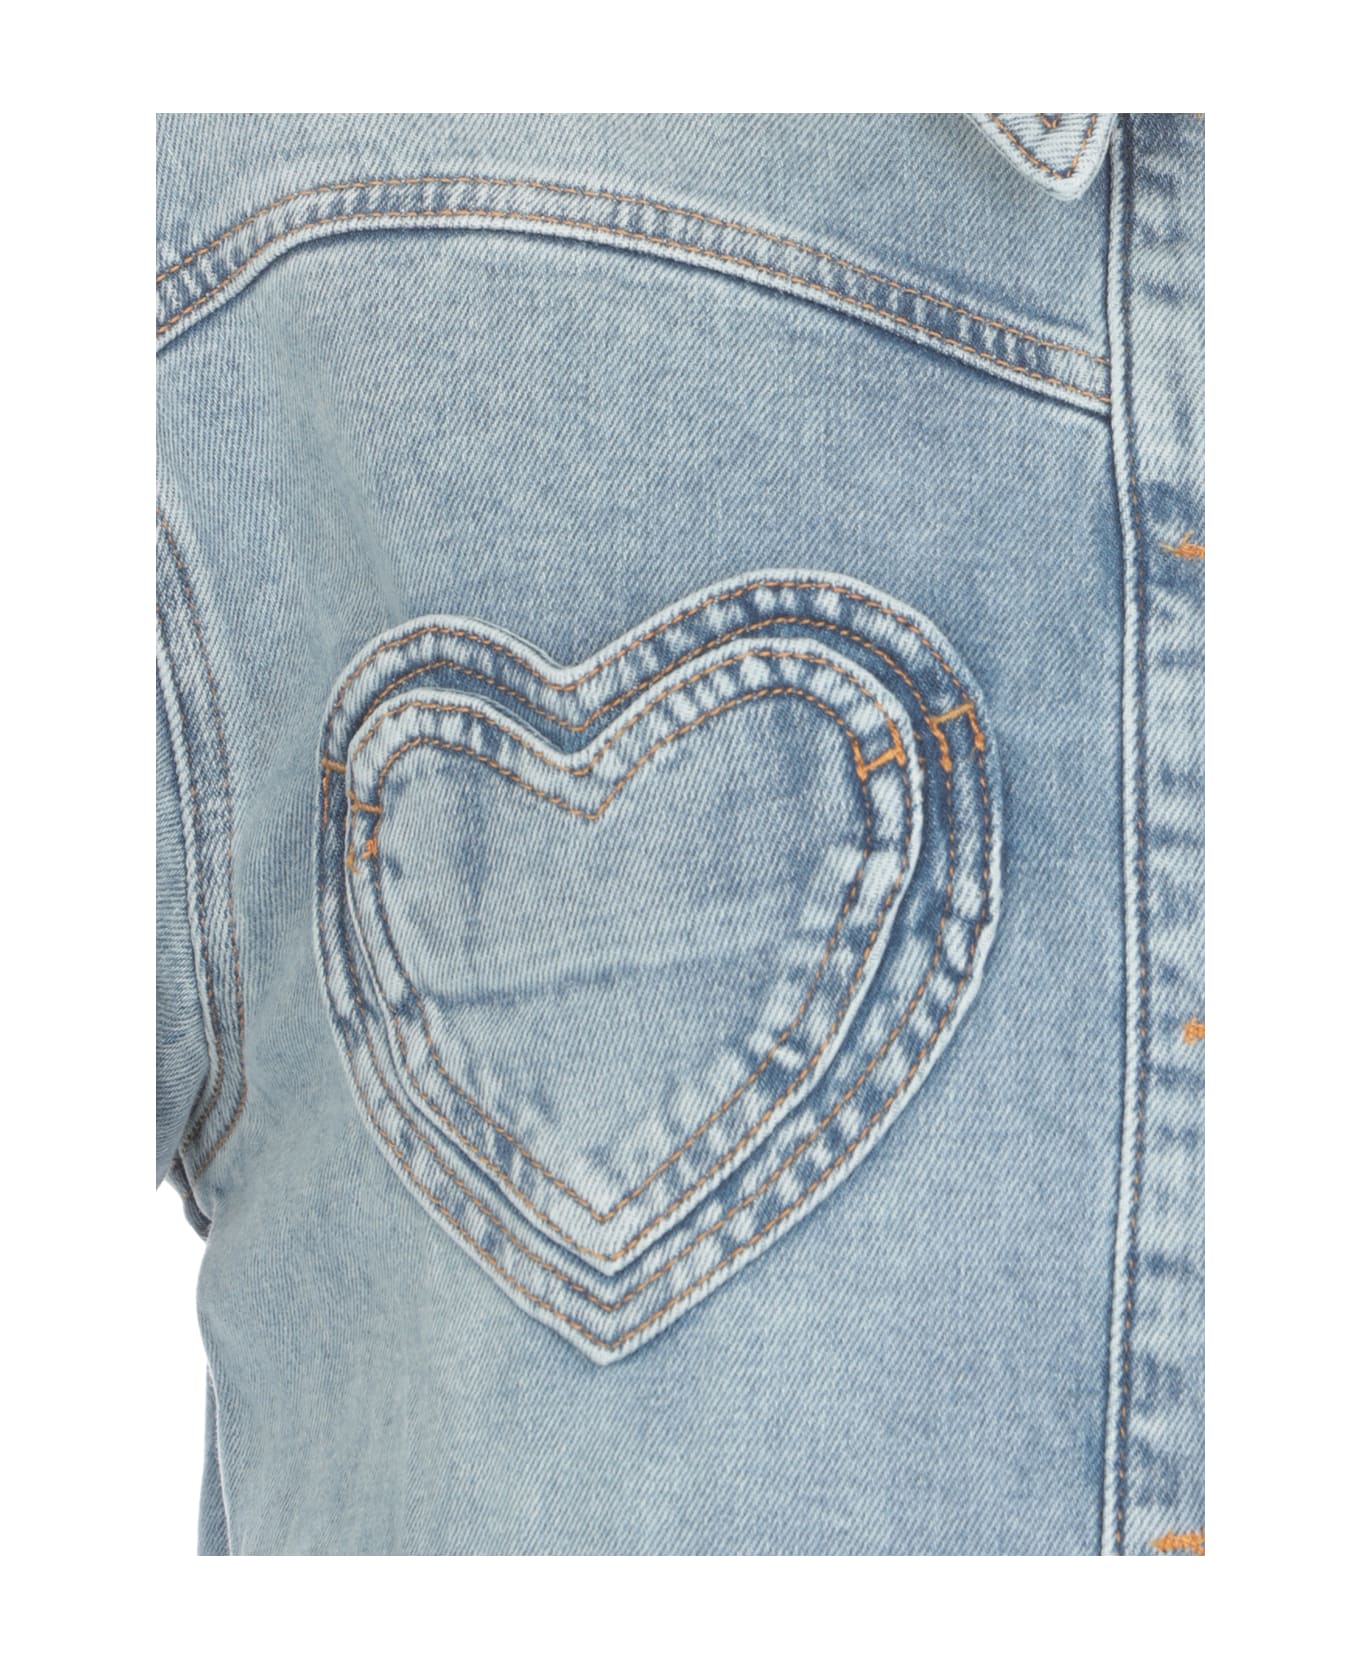 M05CH1N0 Jeans Heart Pockets Denim Jacket - Denim